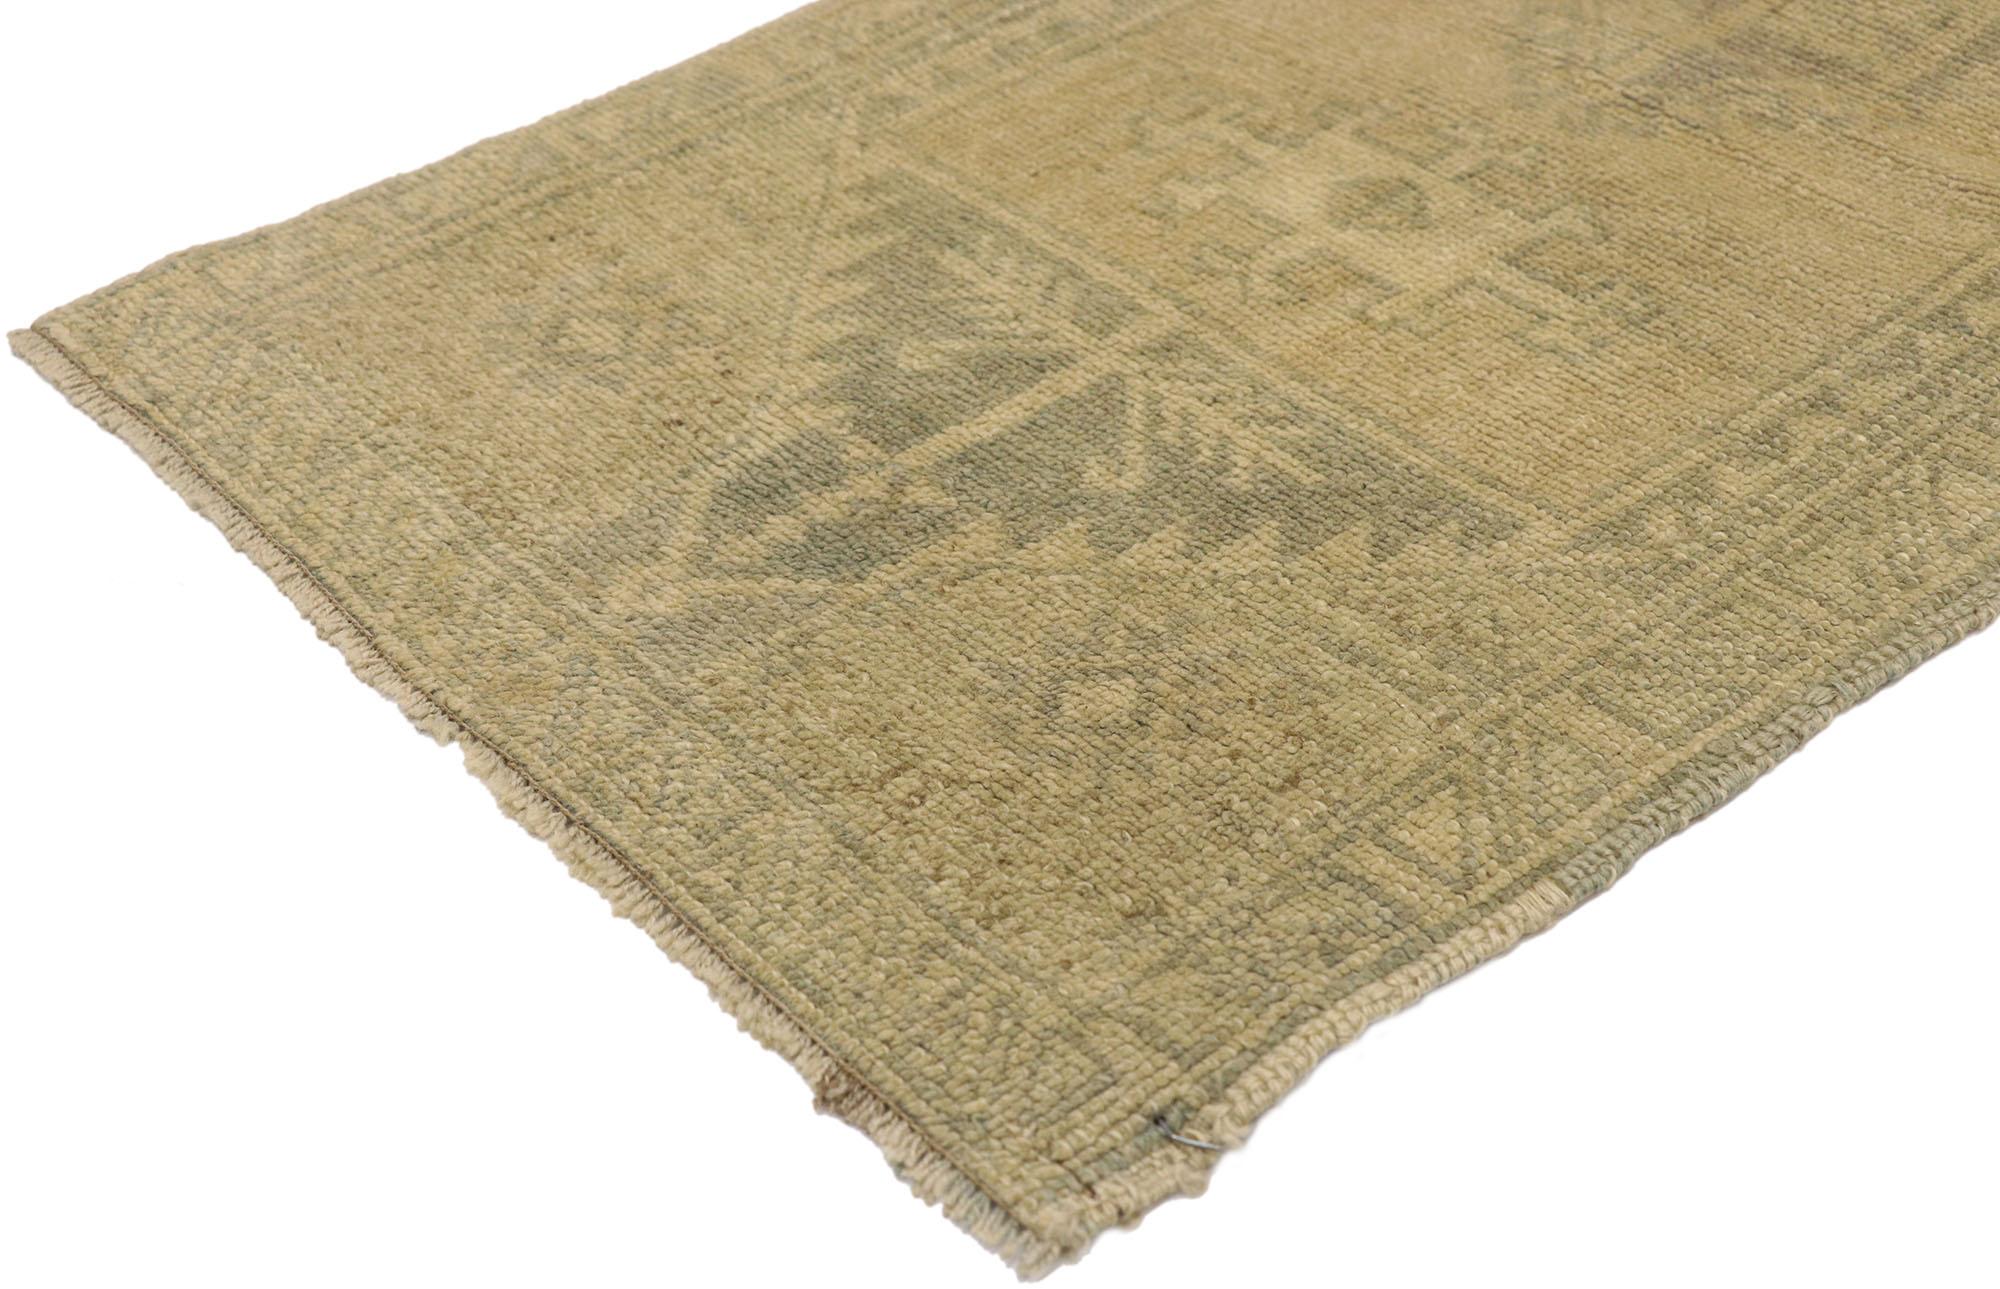 51242 Vintage Turkish Yastik Rug, 01'08 X 04'00. Turkish Yastik rugs, alternatively known as 